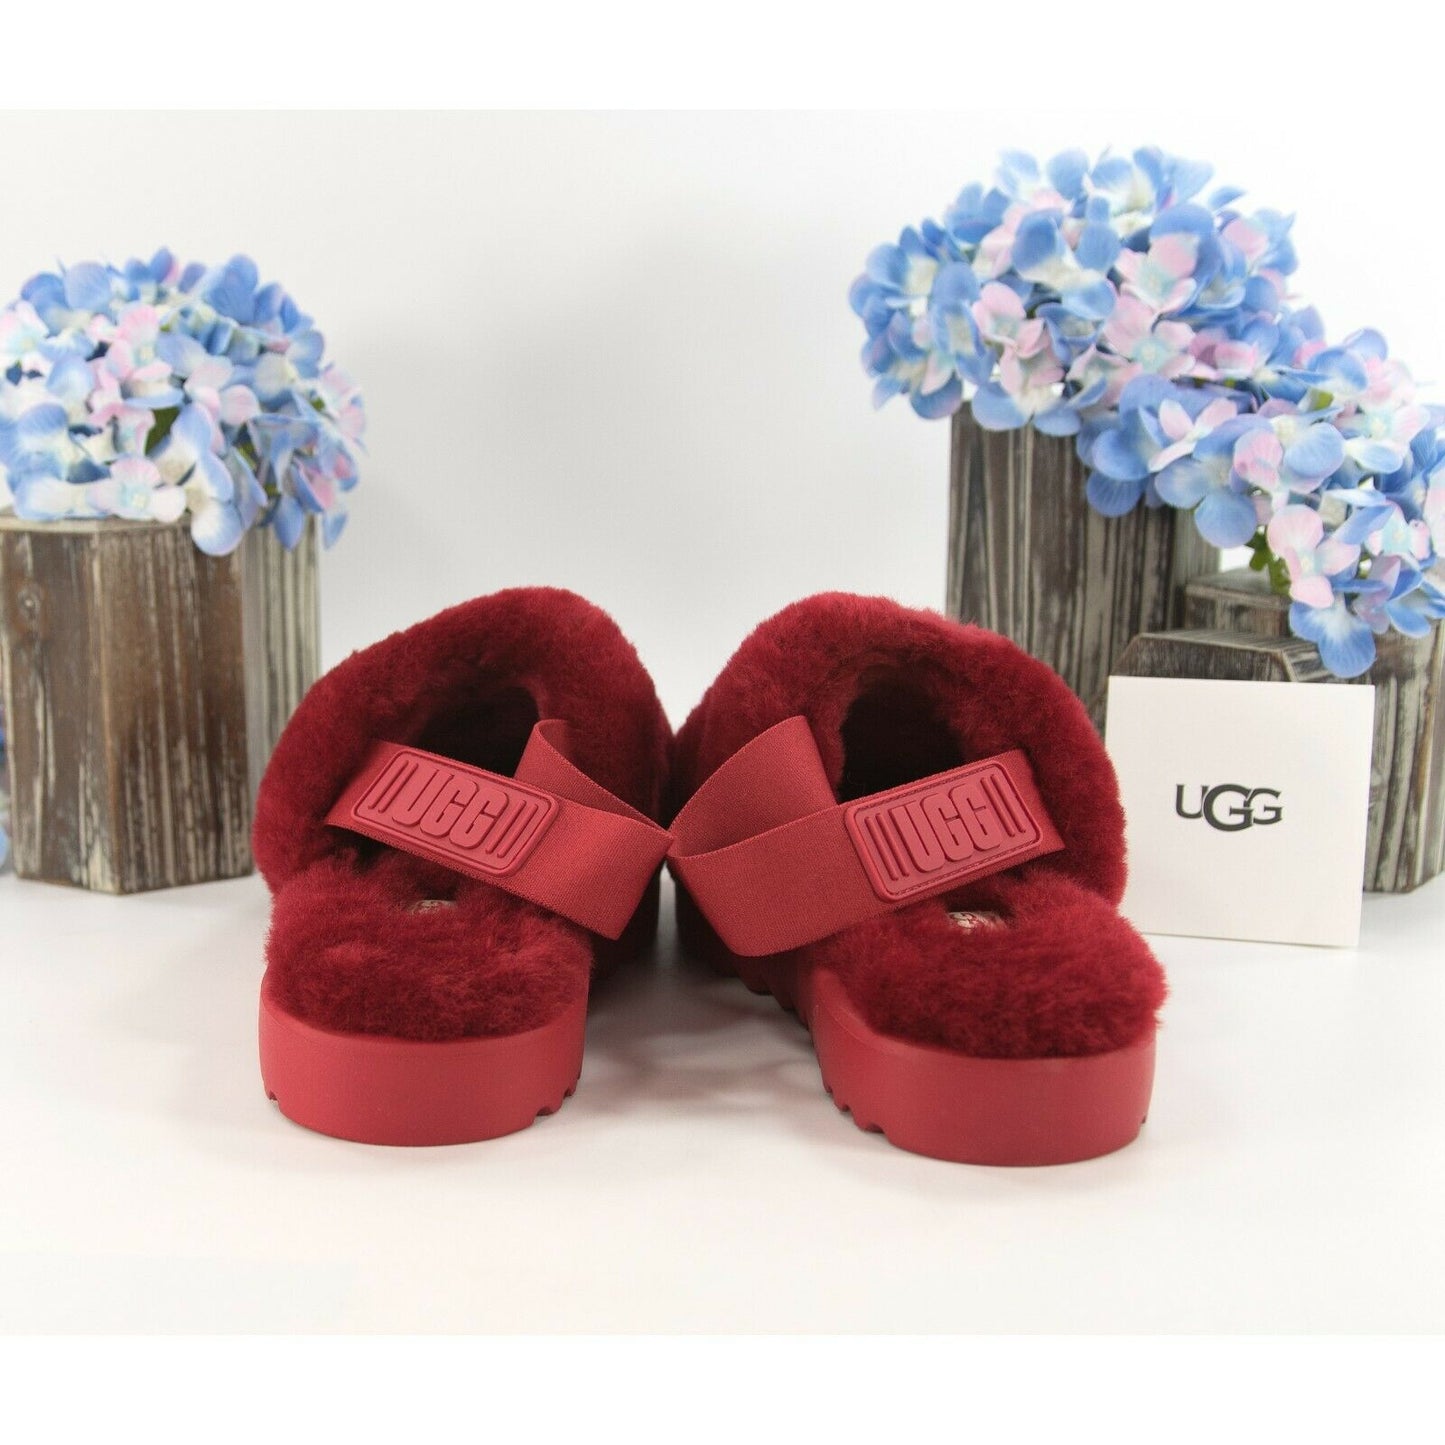 UGG Fluff Oh Yea Robe Red Sheepskin Fur Slippers Slides Sandals Size 6 NIB